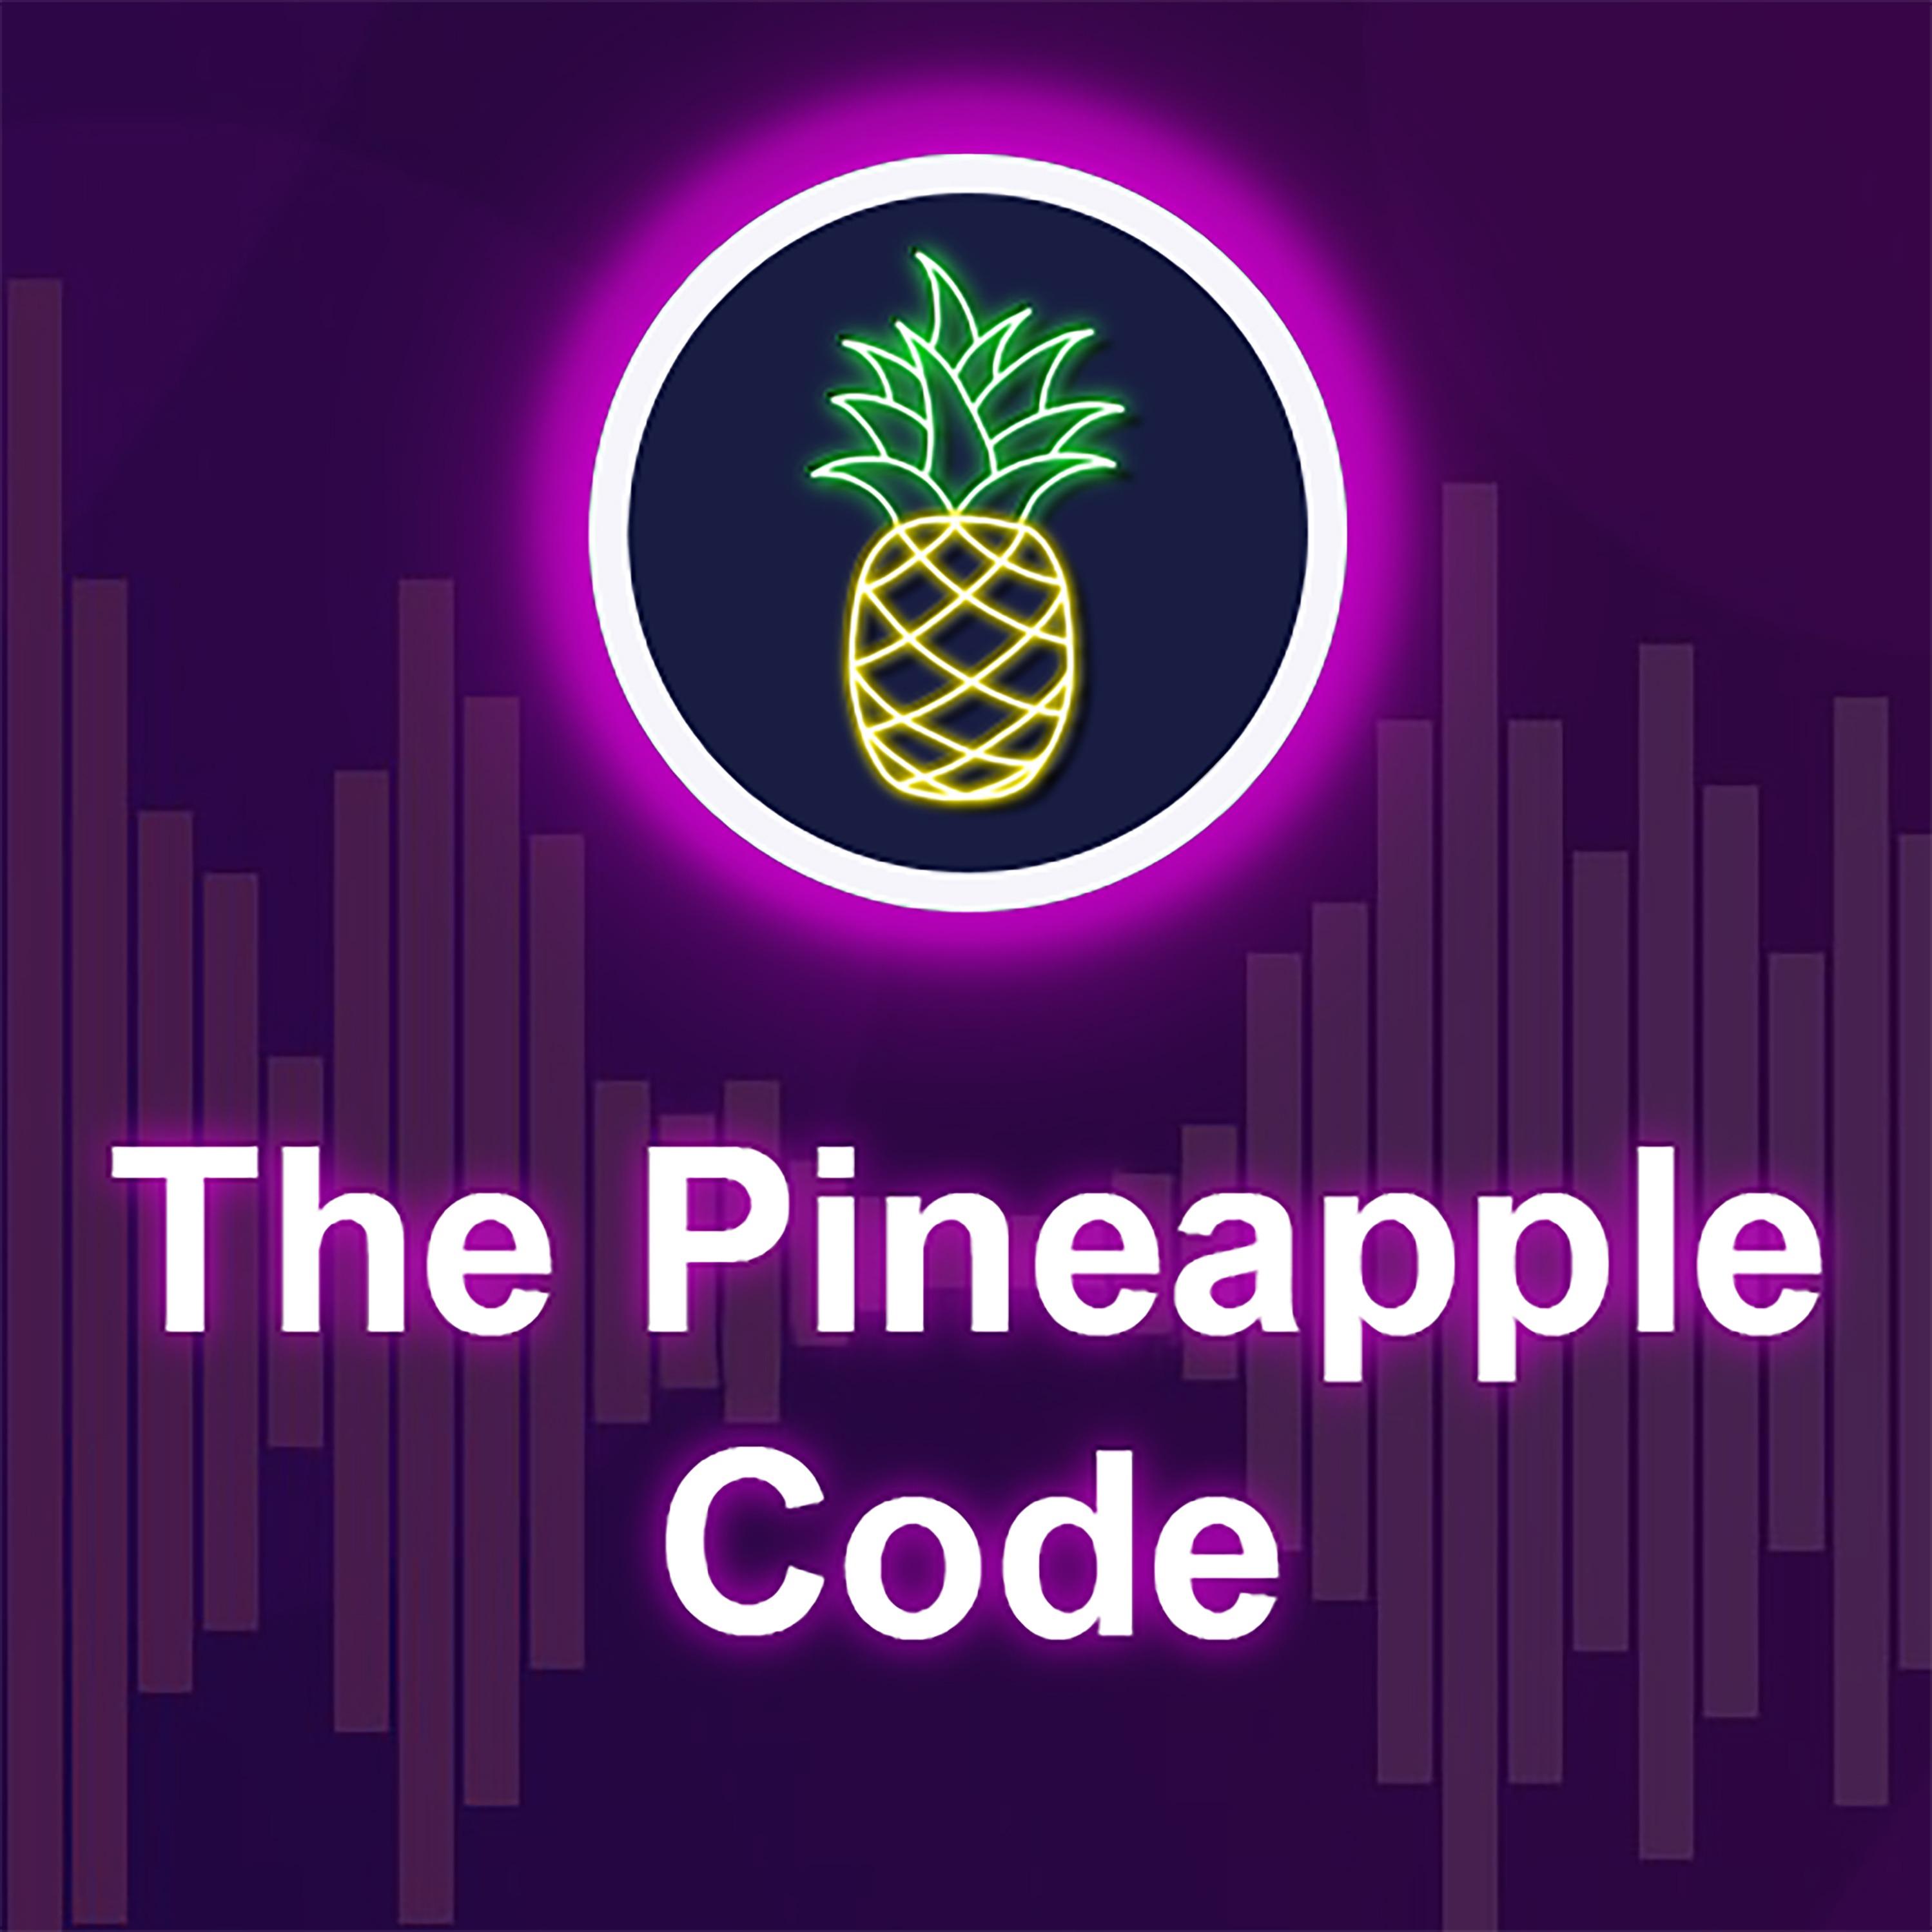 The Pineapple Code